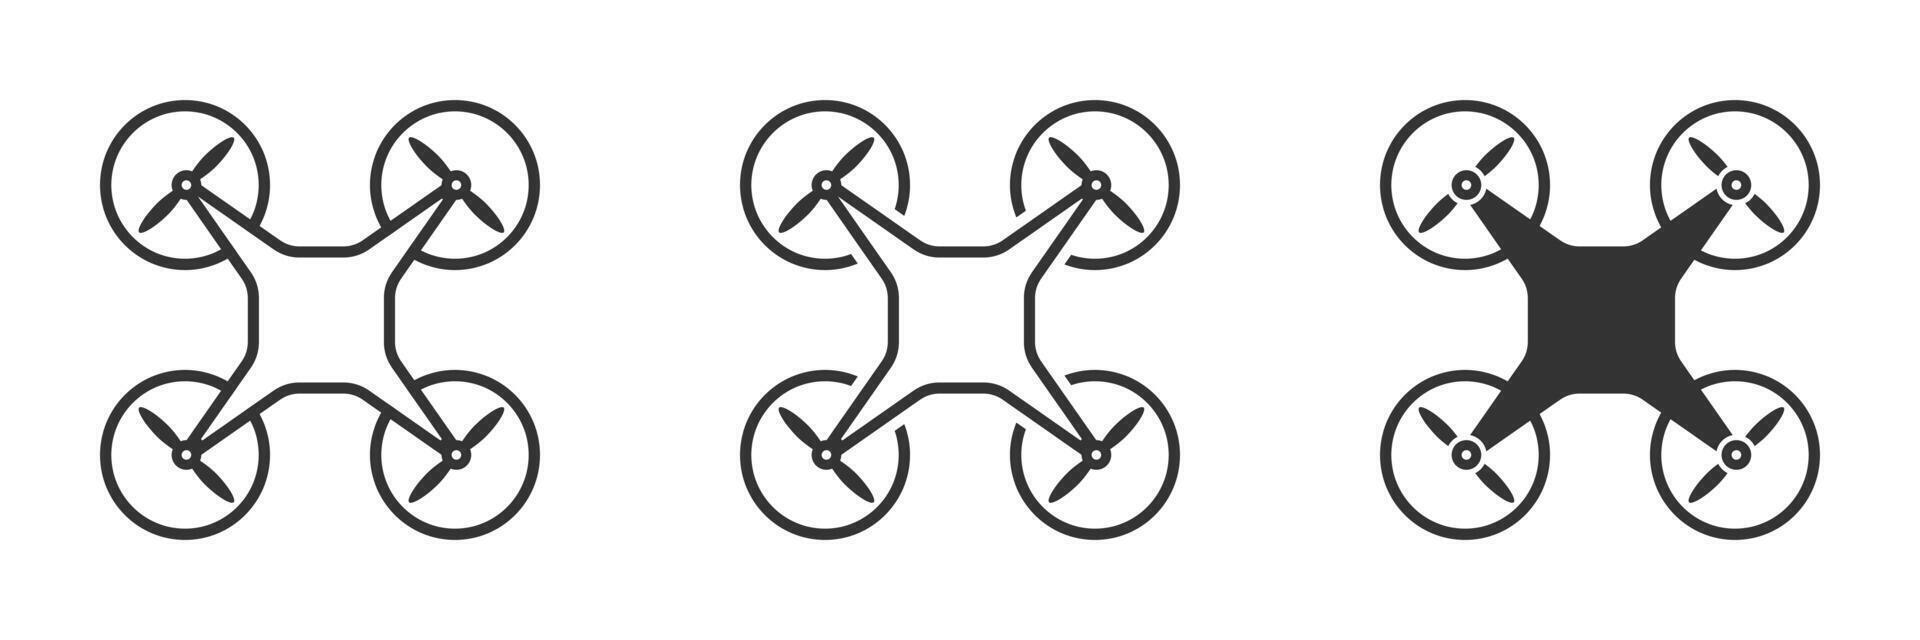 Fpv drone icon. Vector illustration.